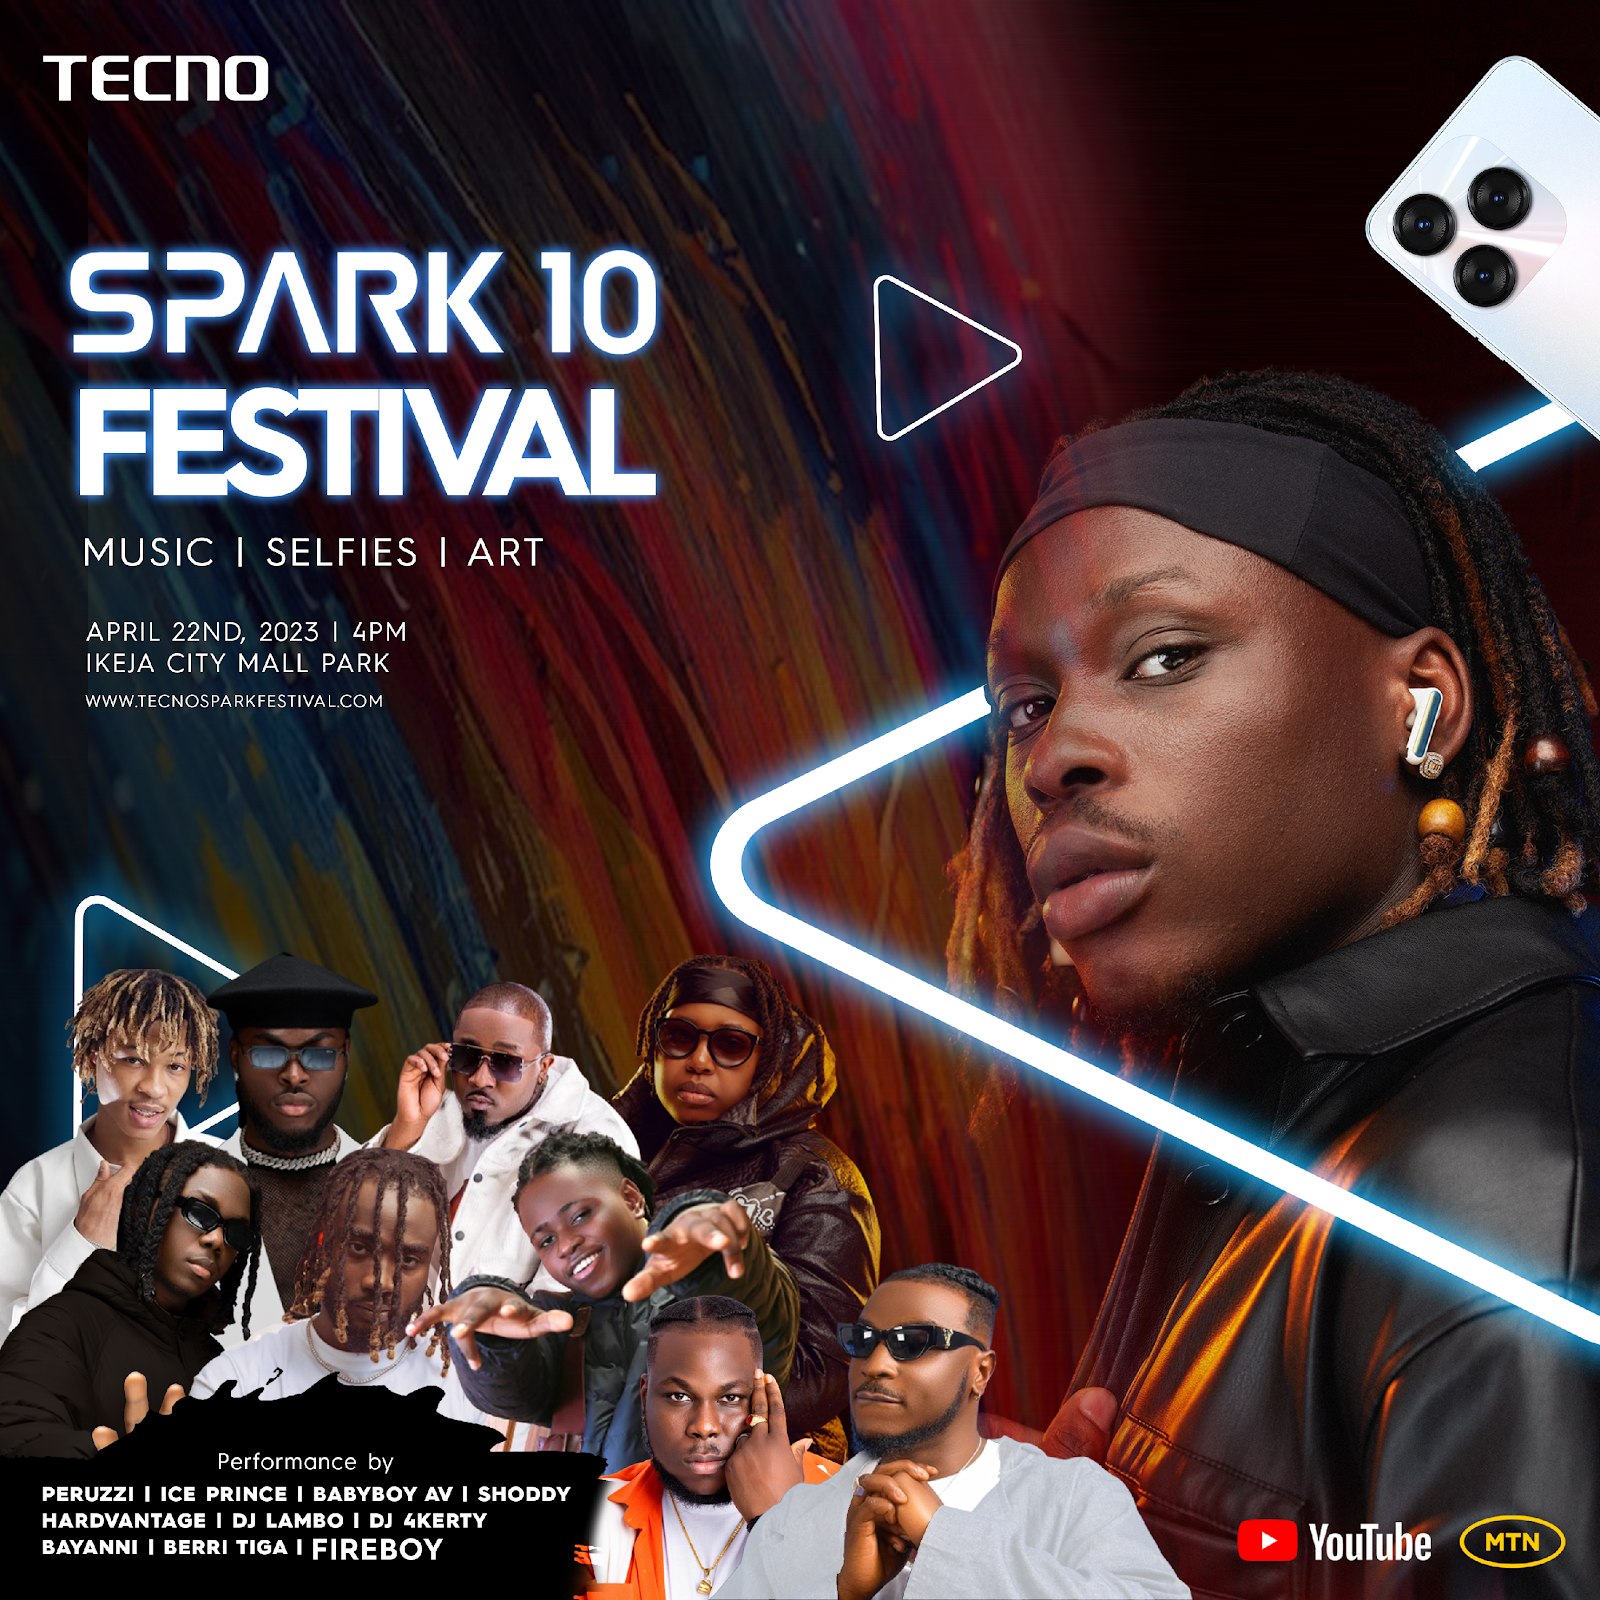 Tecno Spark 10 Festival happening today at Ikeja City Mall!